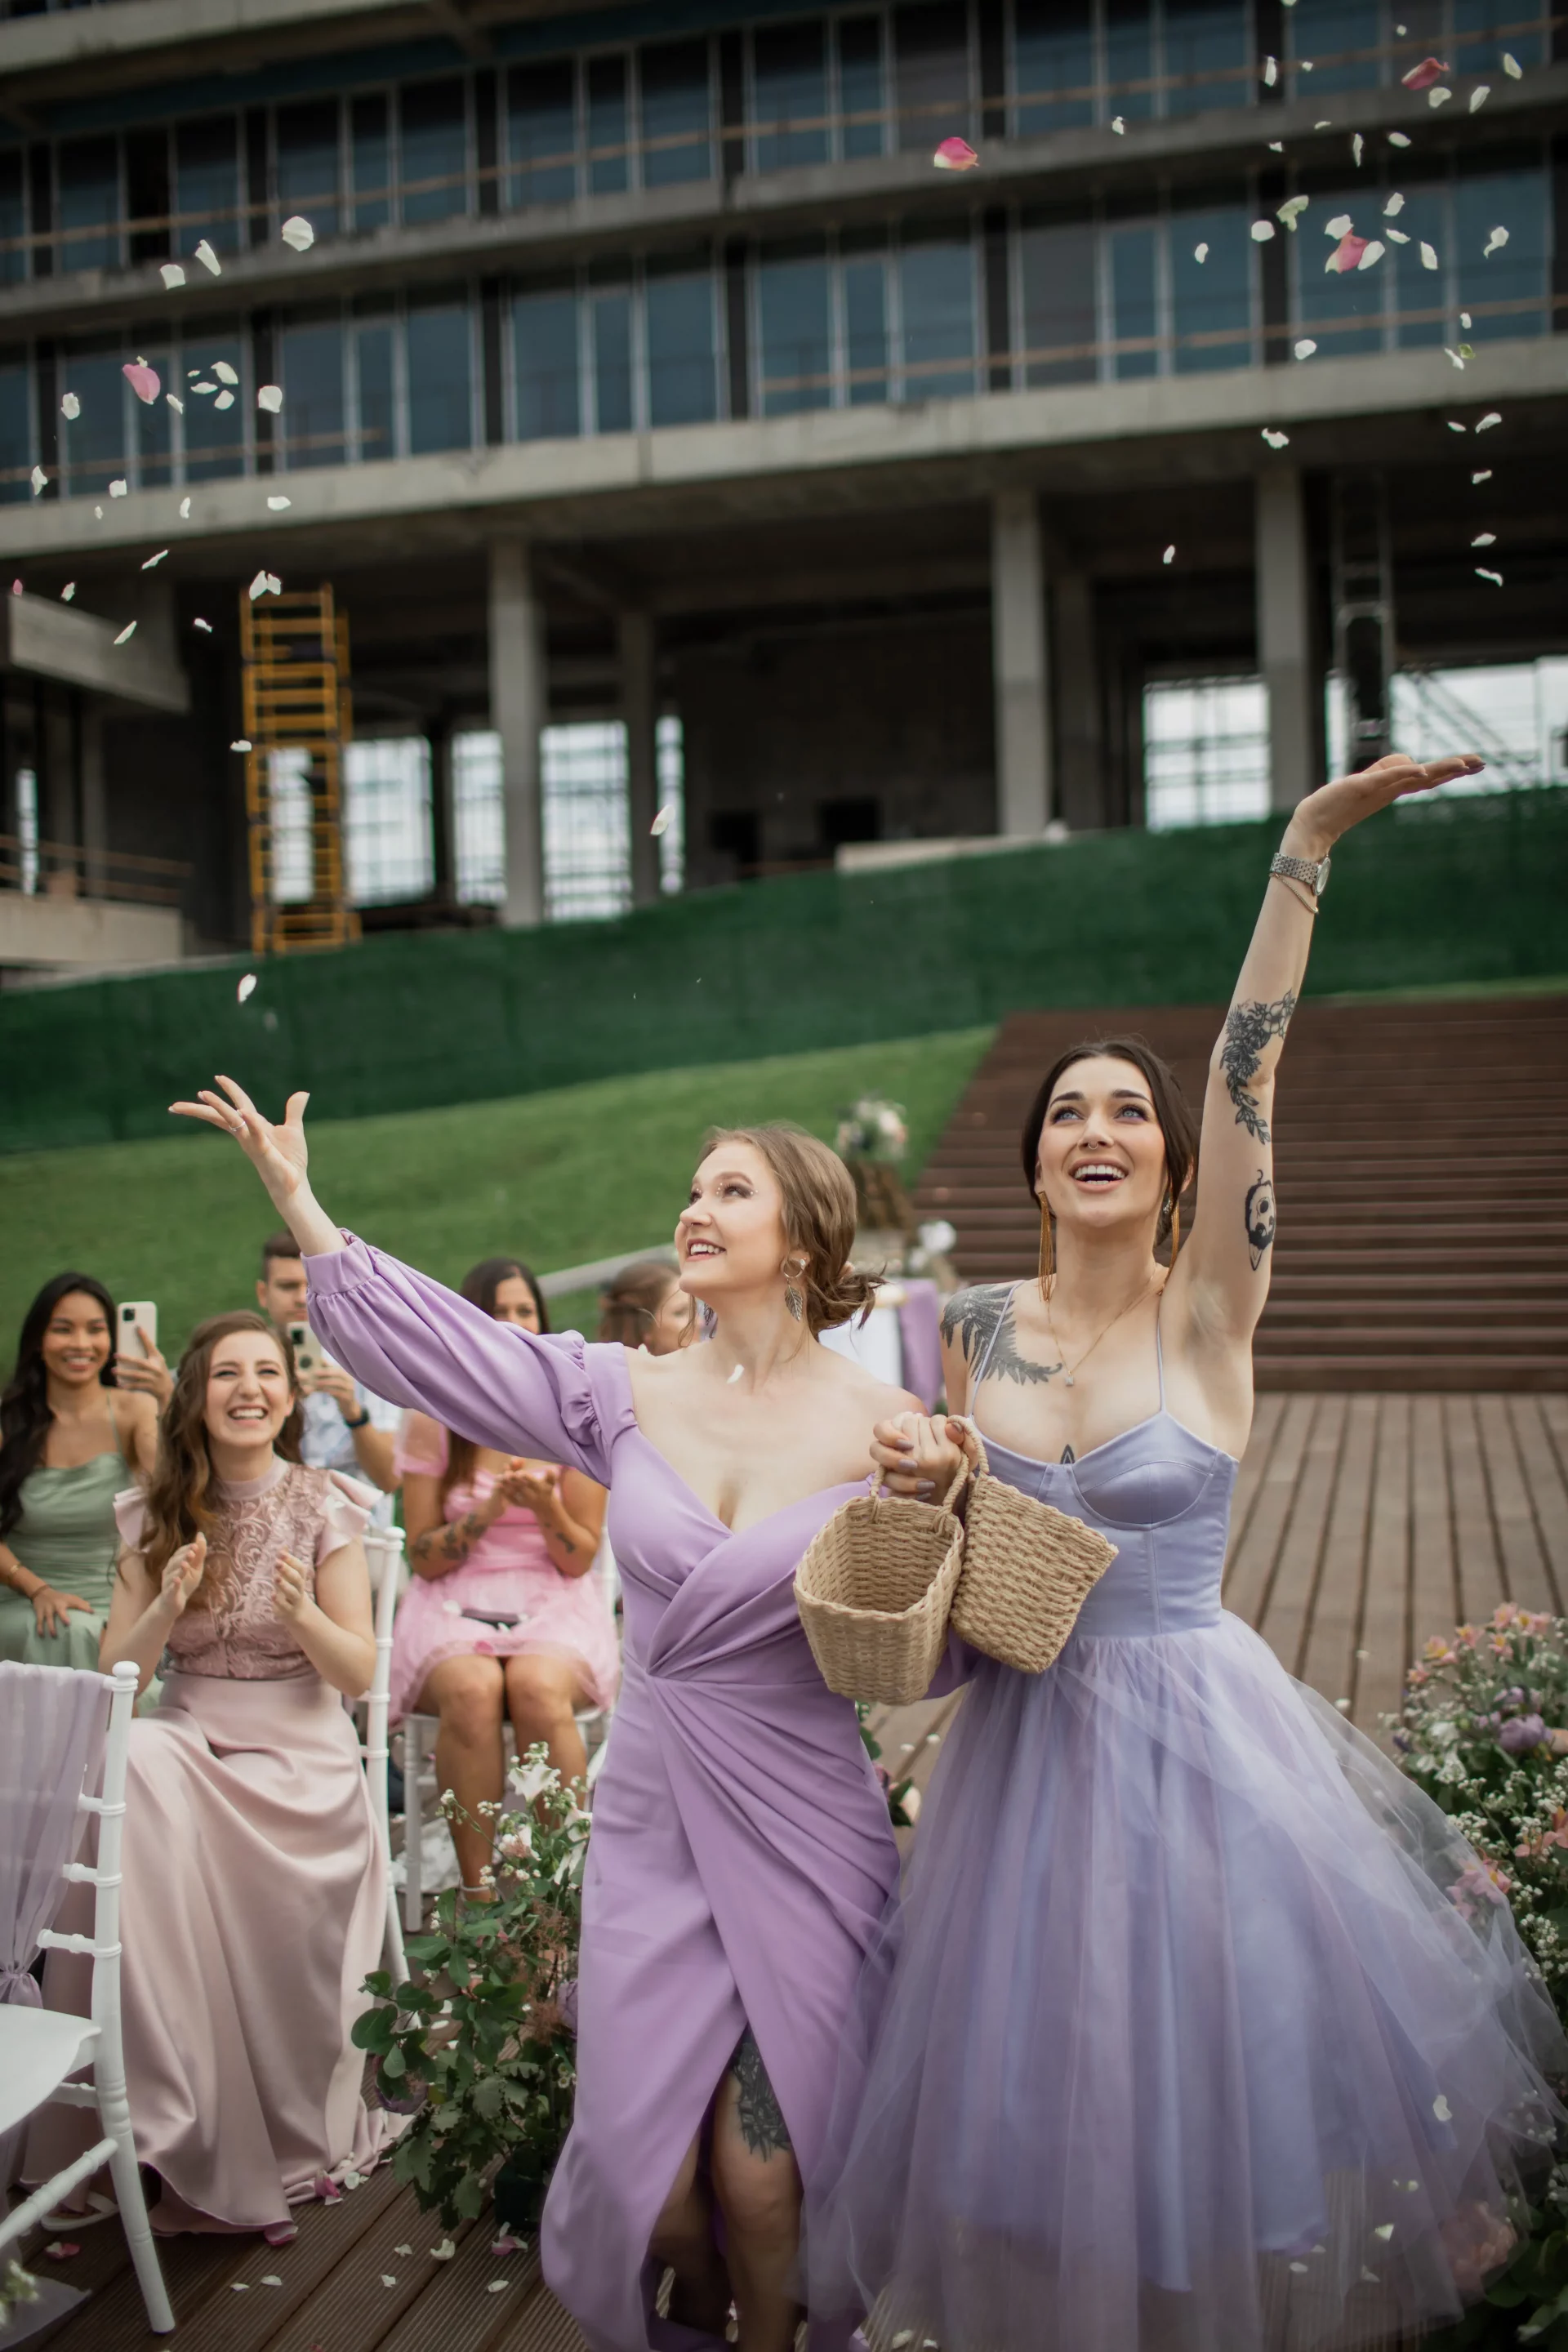 Bridesmaids at a wedding in Georgia